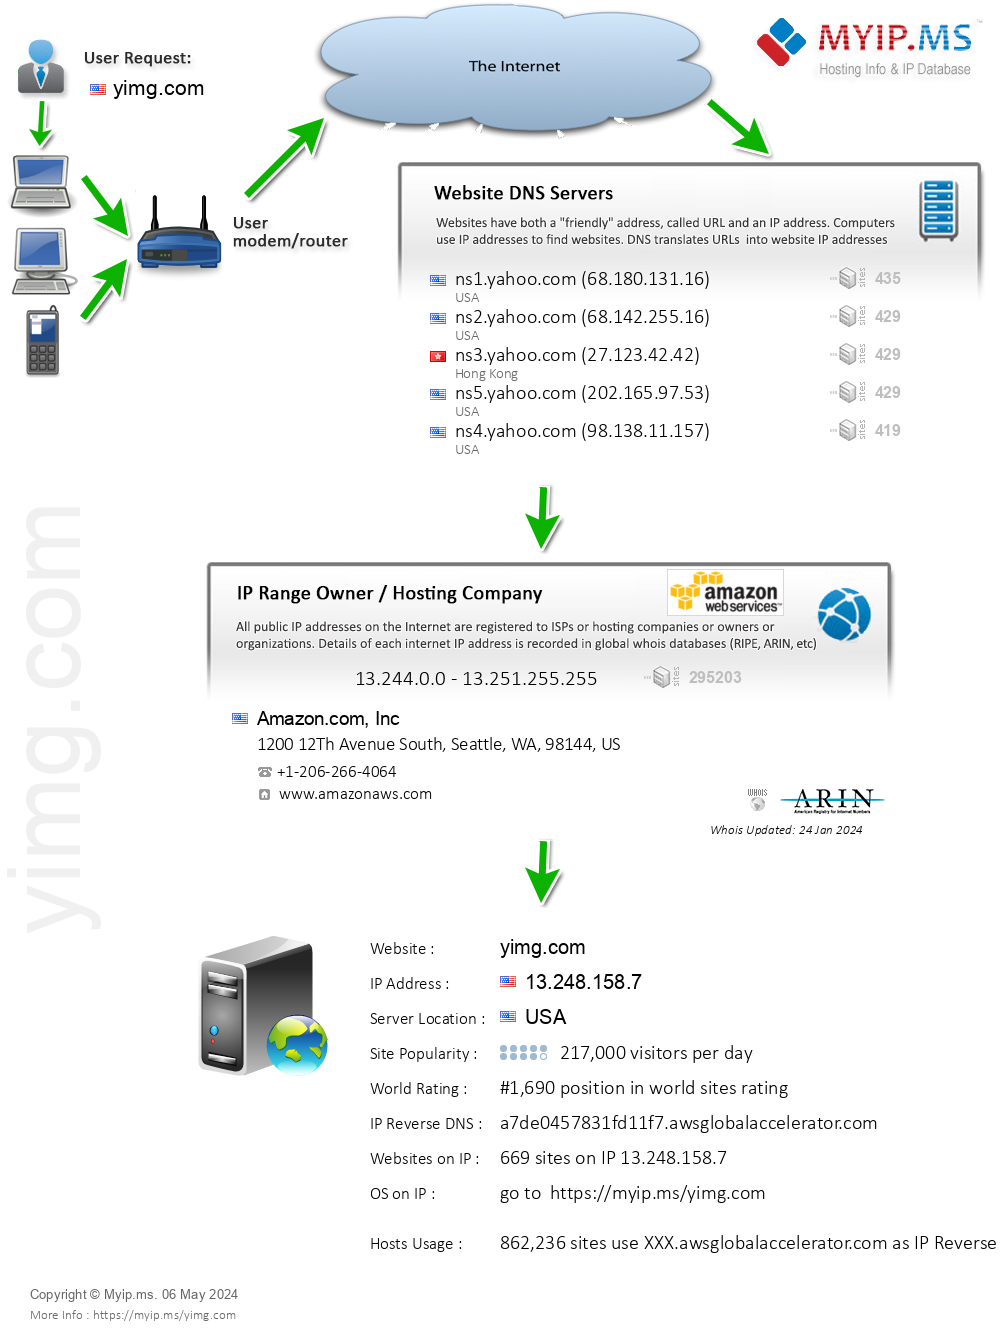 Yimg.com - Website Hosting Visual IP Diagram